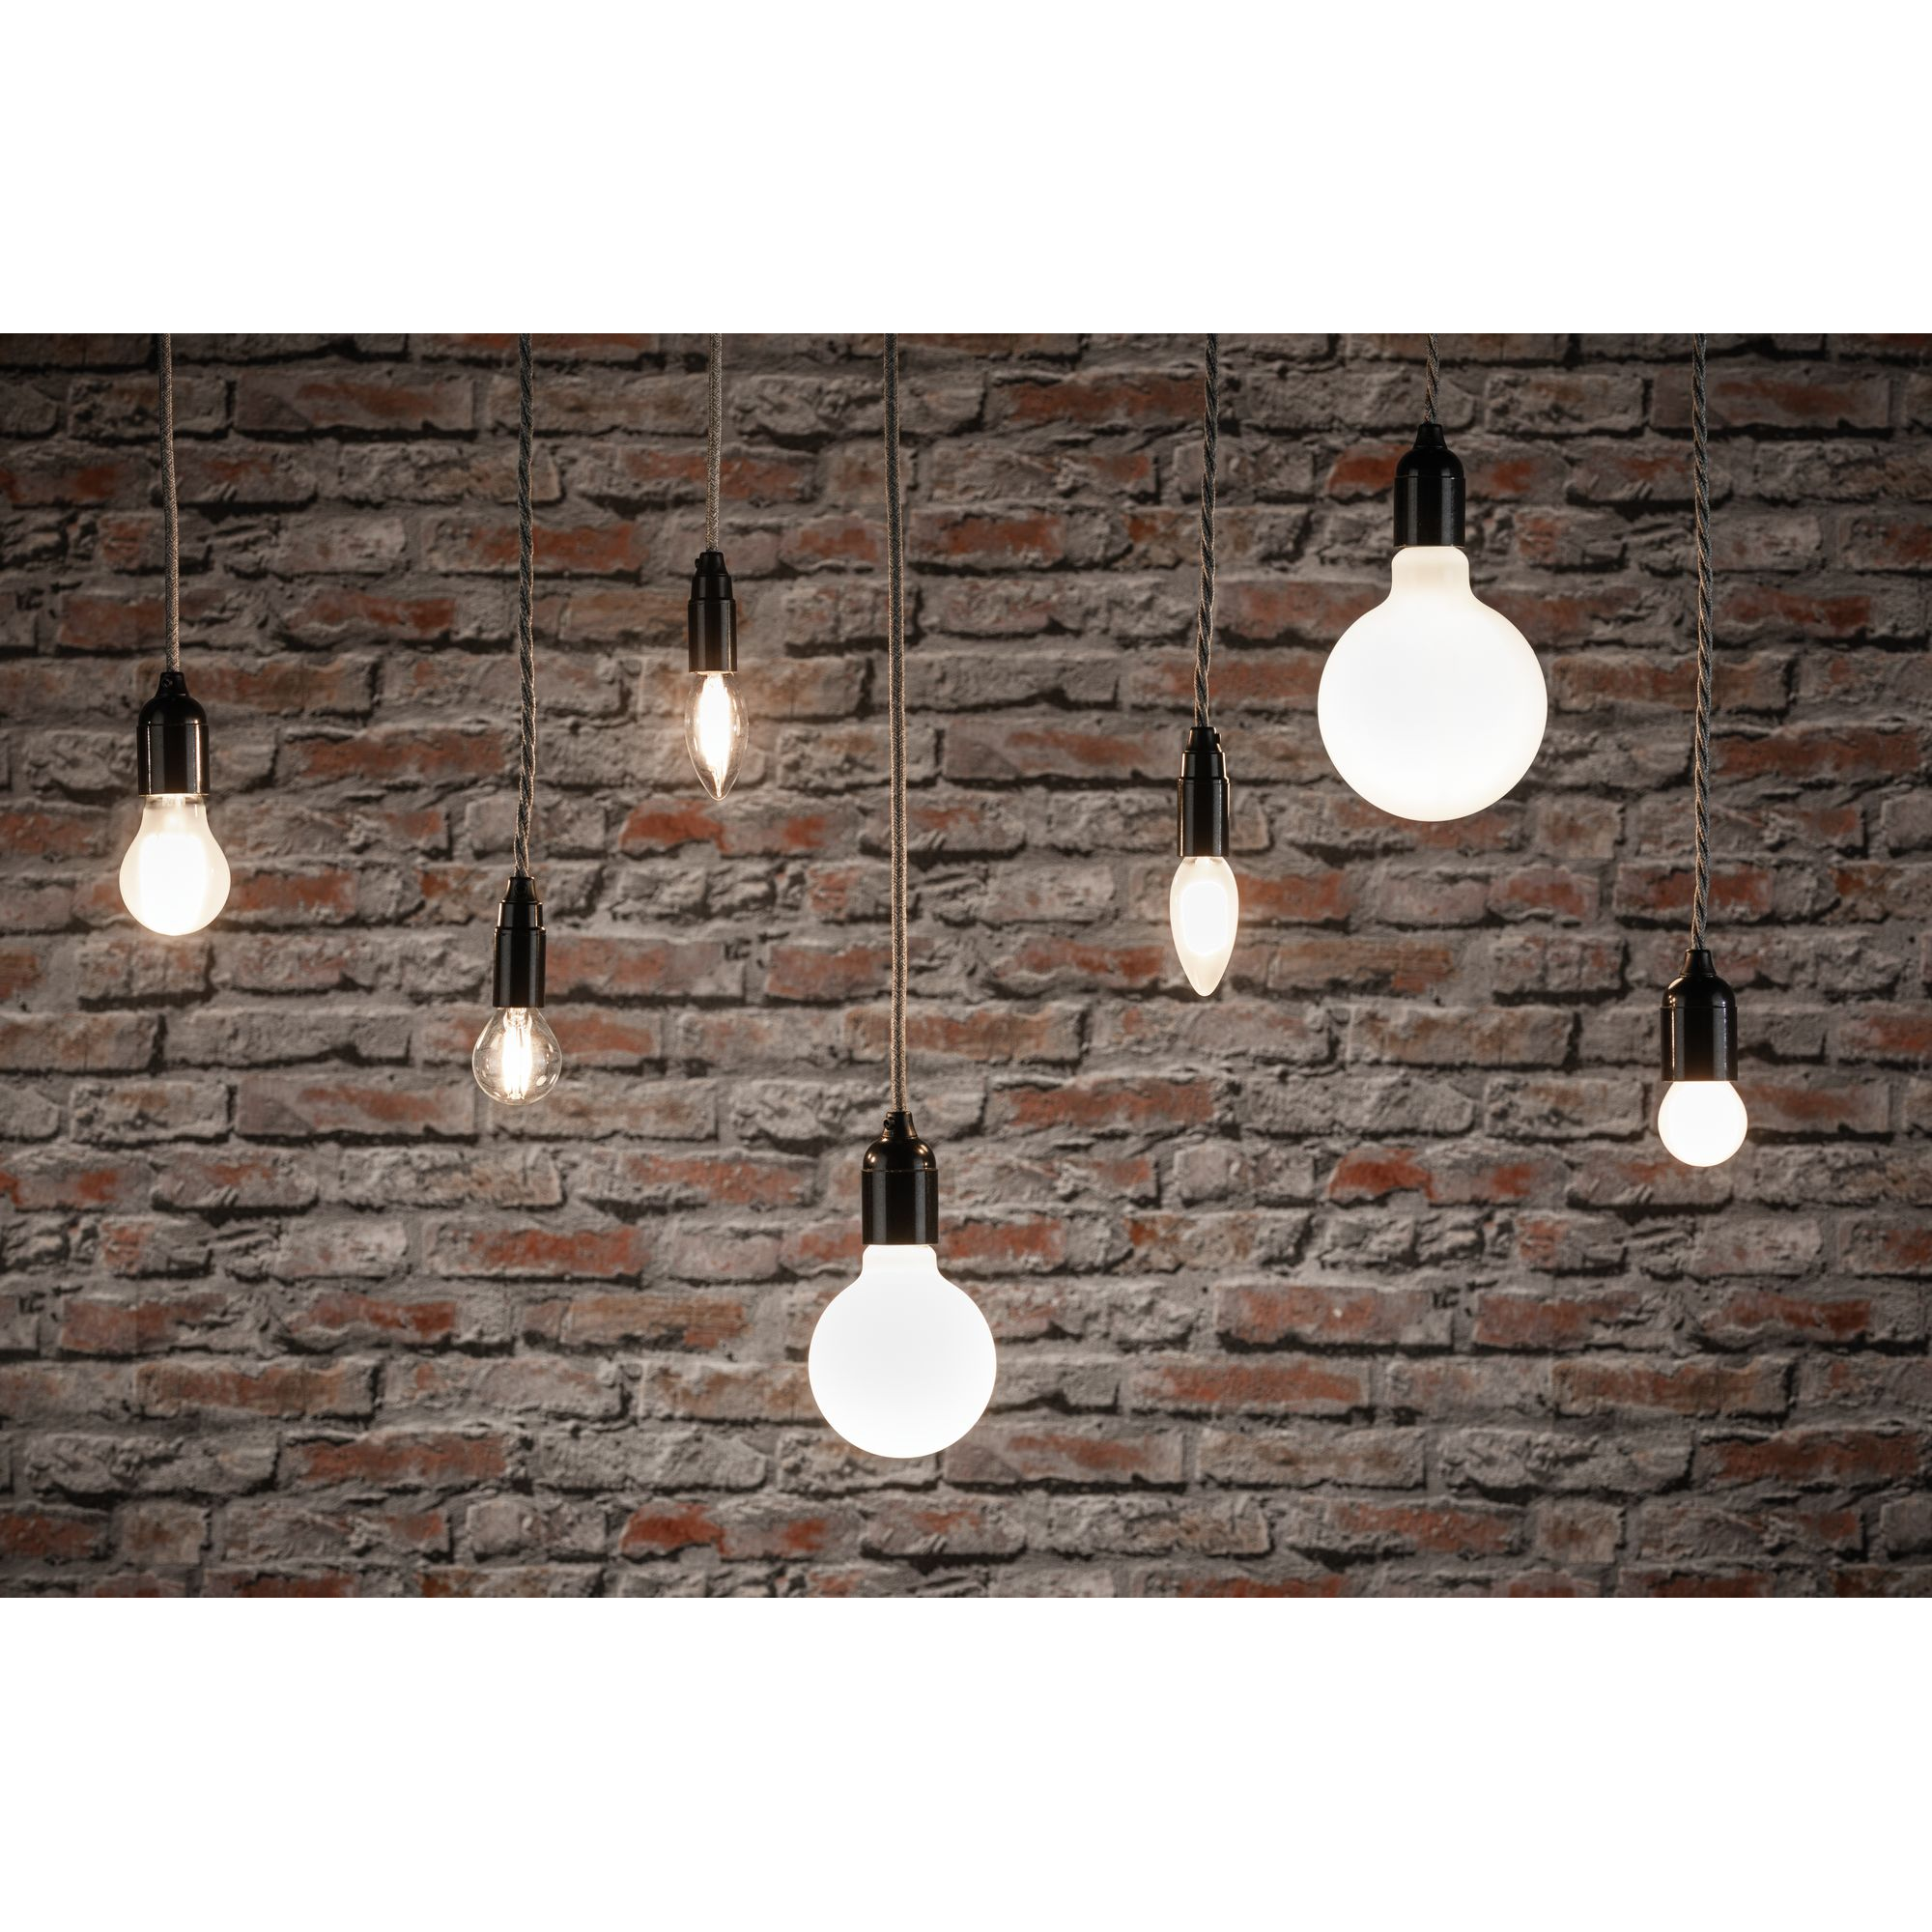 LED-Lampe E27 9W (75W) 1055 lm warmweiß matt + product picture